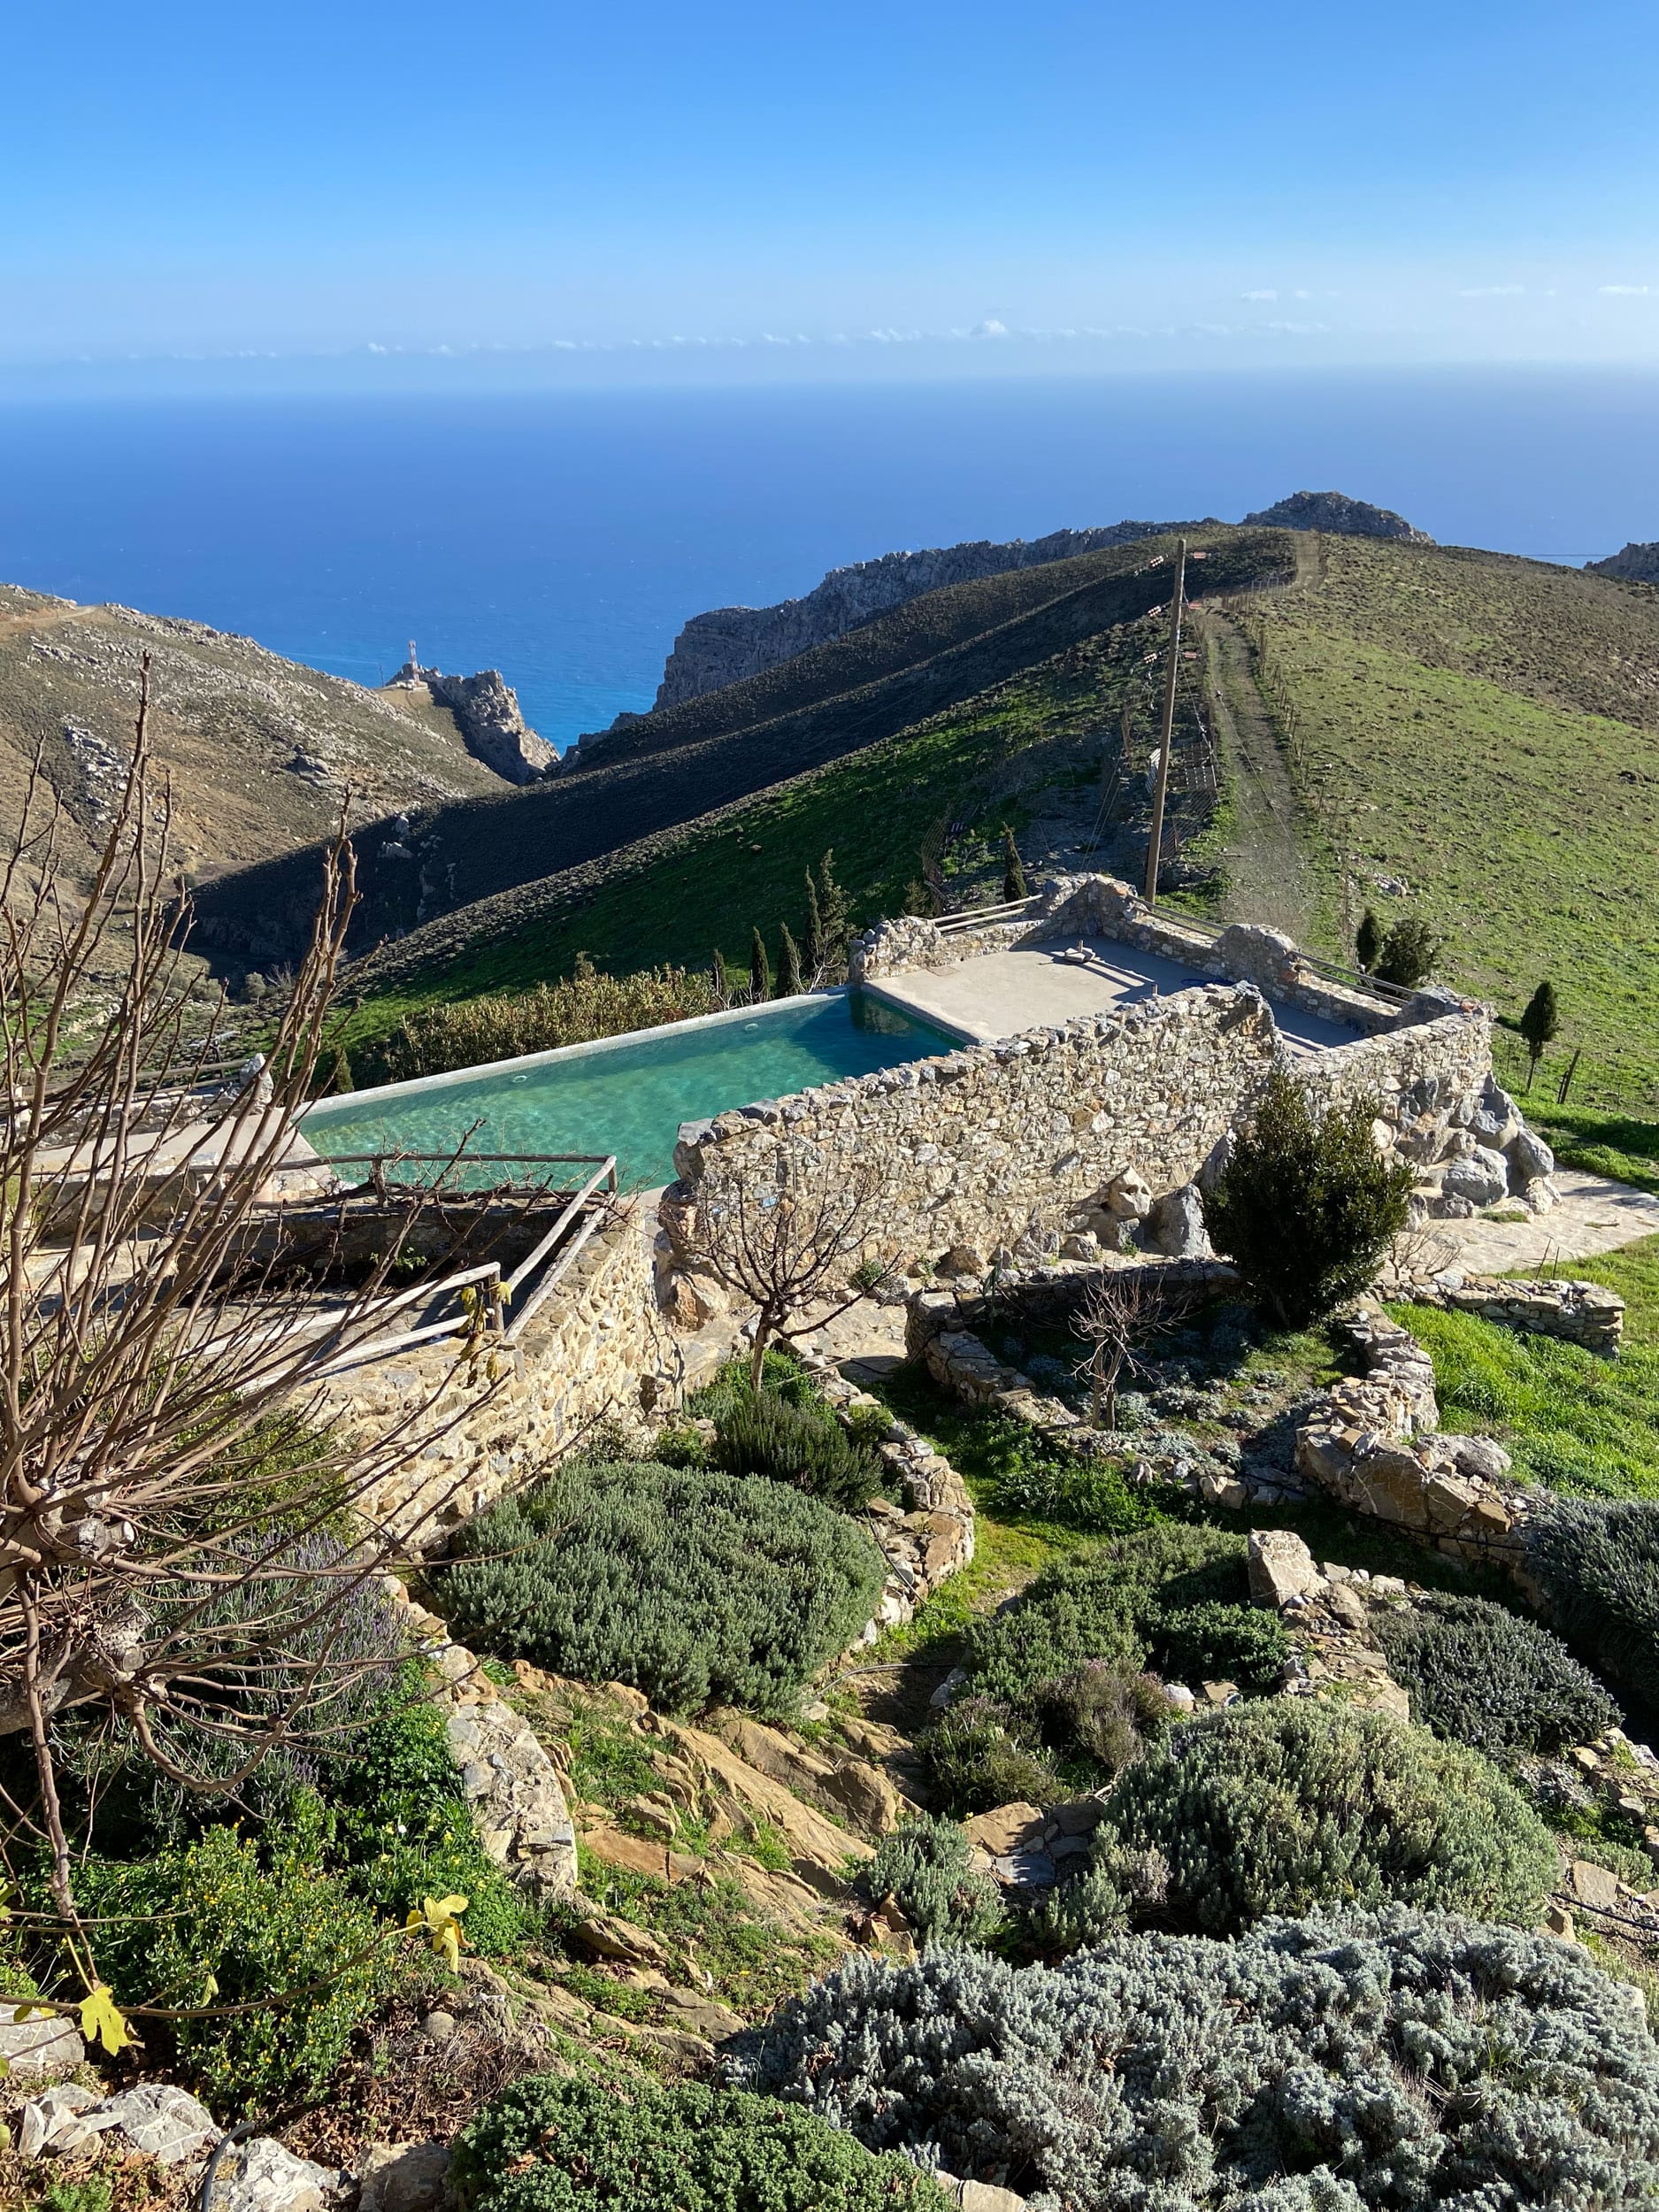 A Slow Cyclist villa and swimming pool overlooking the Cretan coastline.